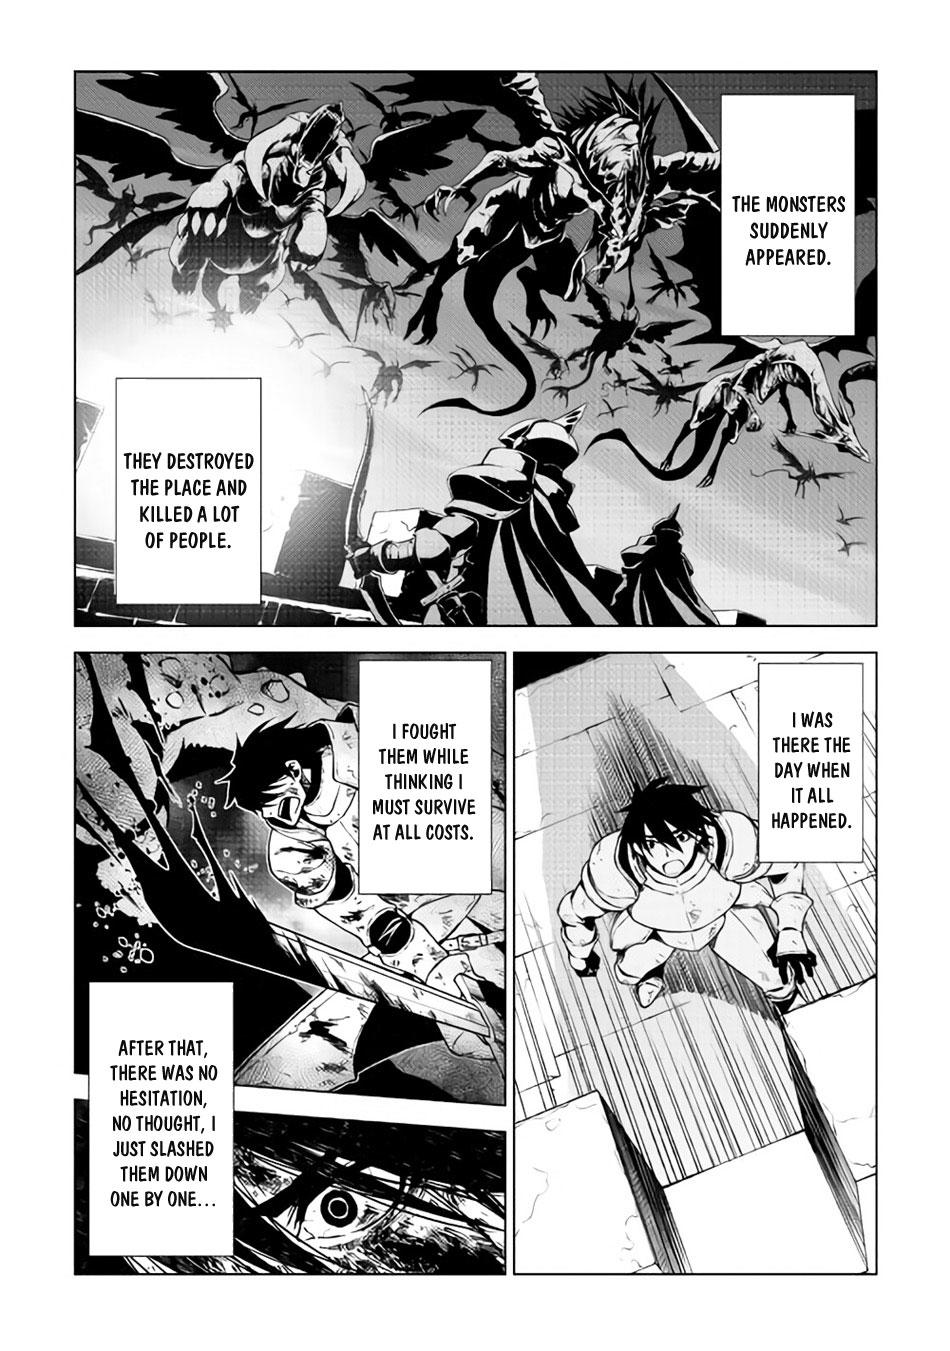 Read Hiraheishi Wa Kako O Yumemiru Vol.1 Chapter 7 on Mangakakalot